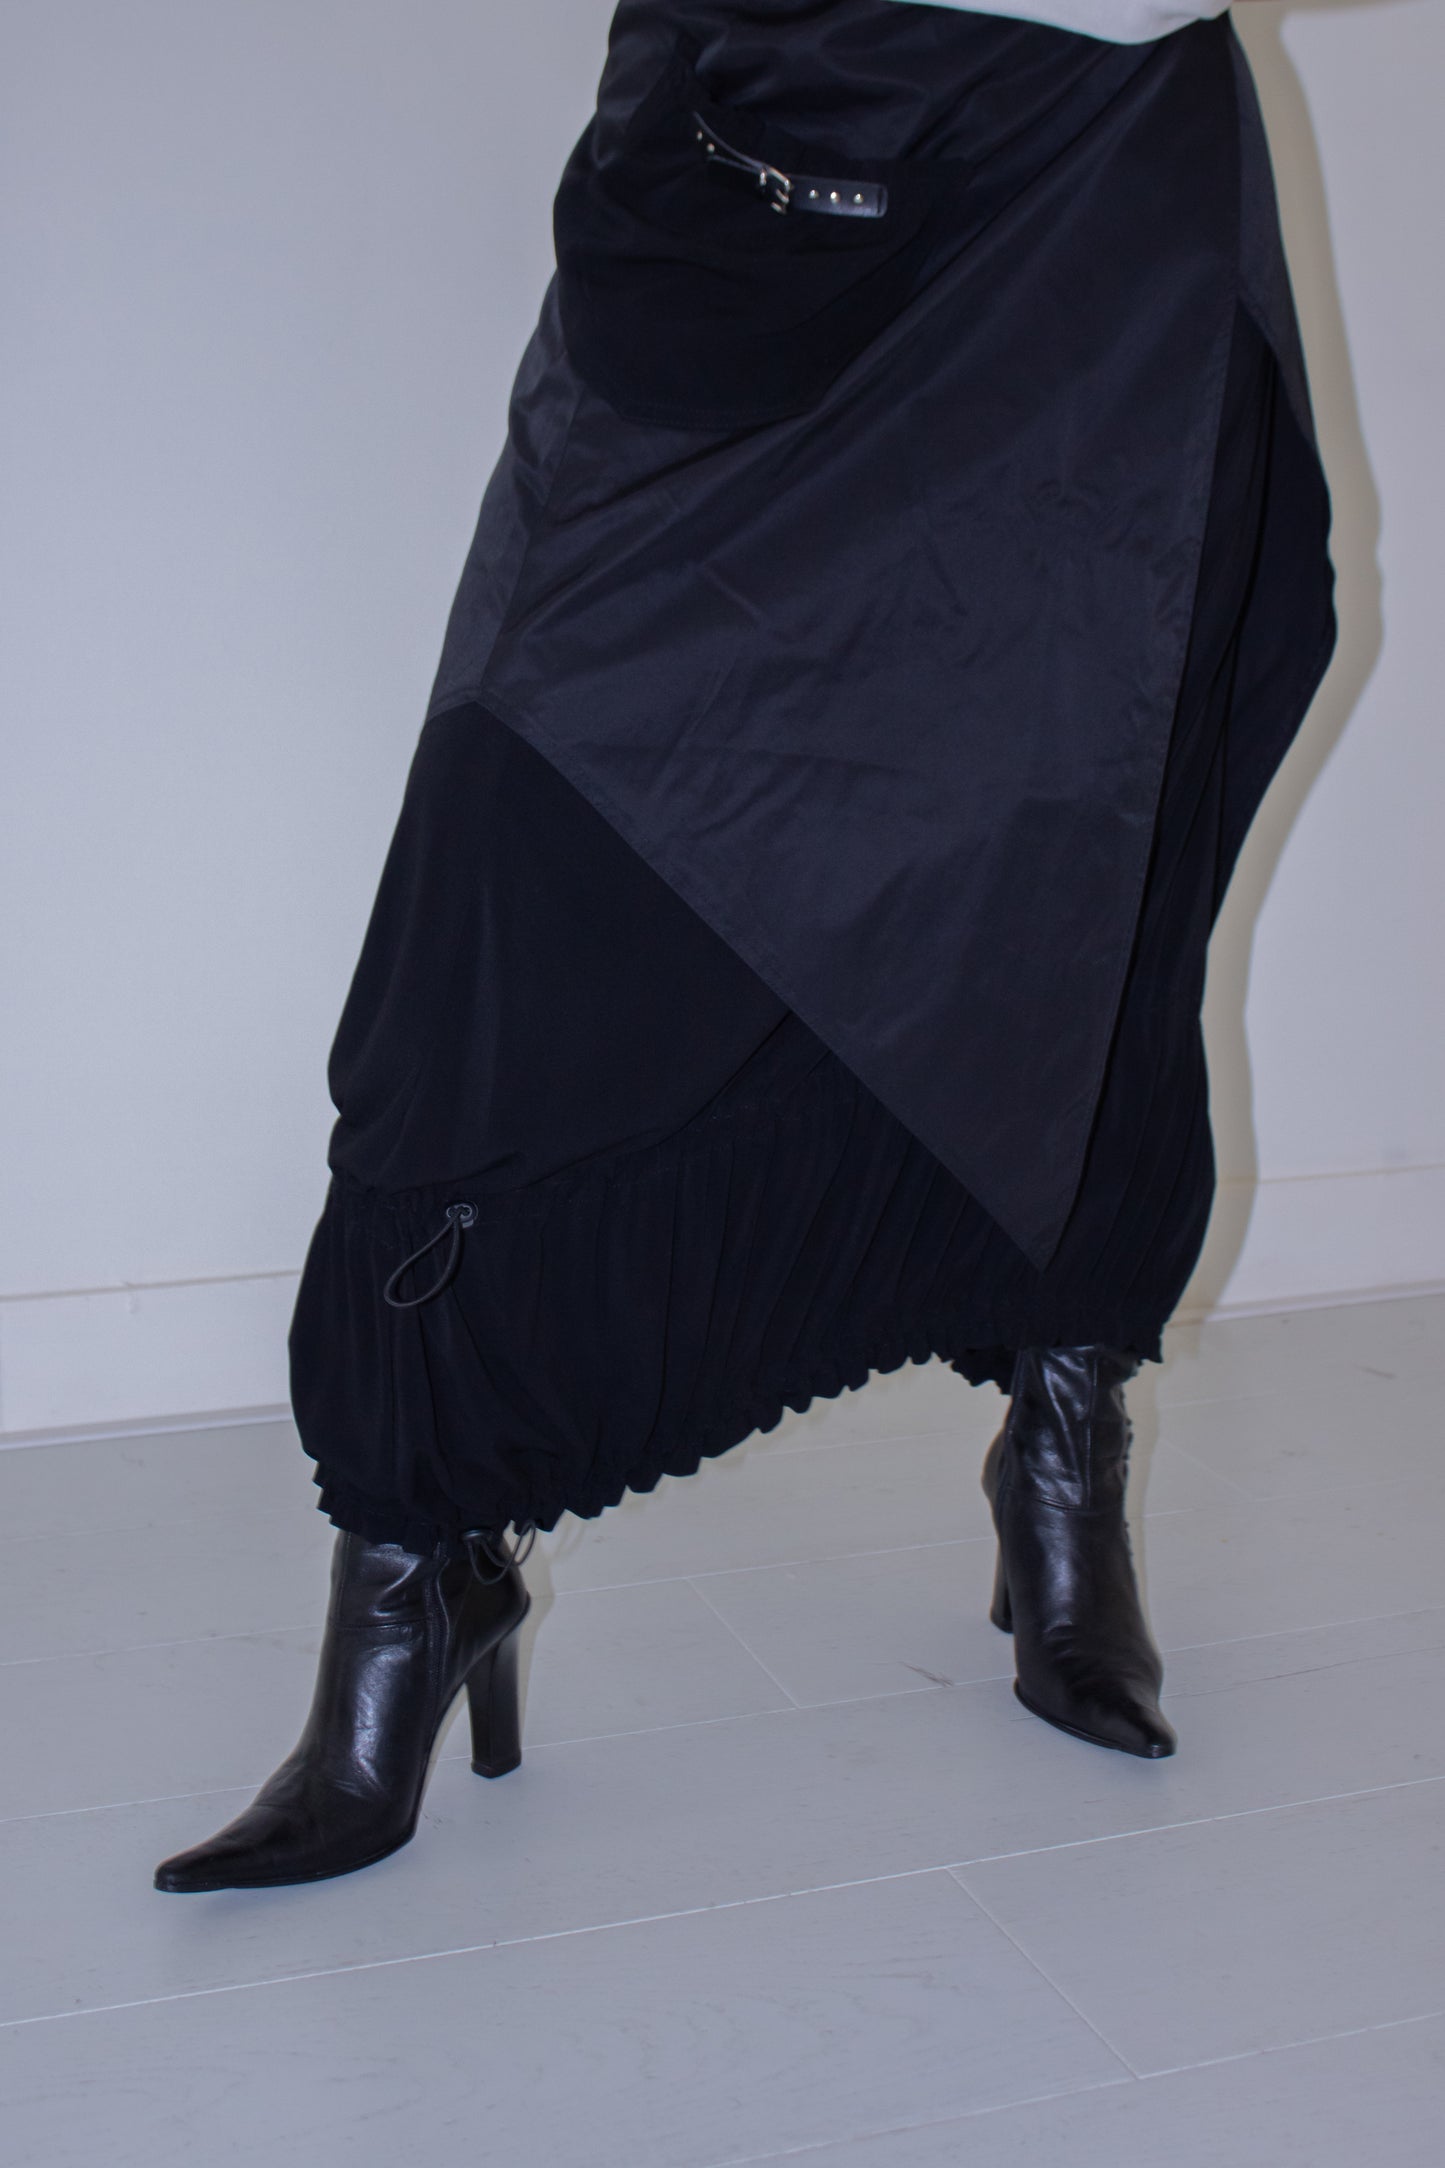 Parachute Skirt